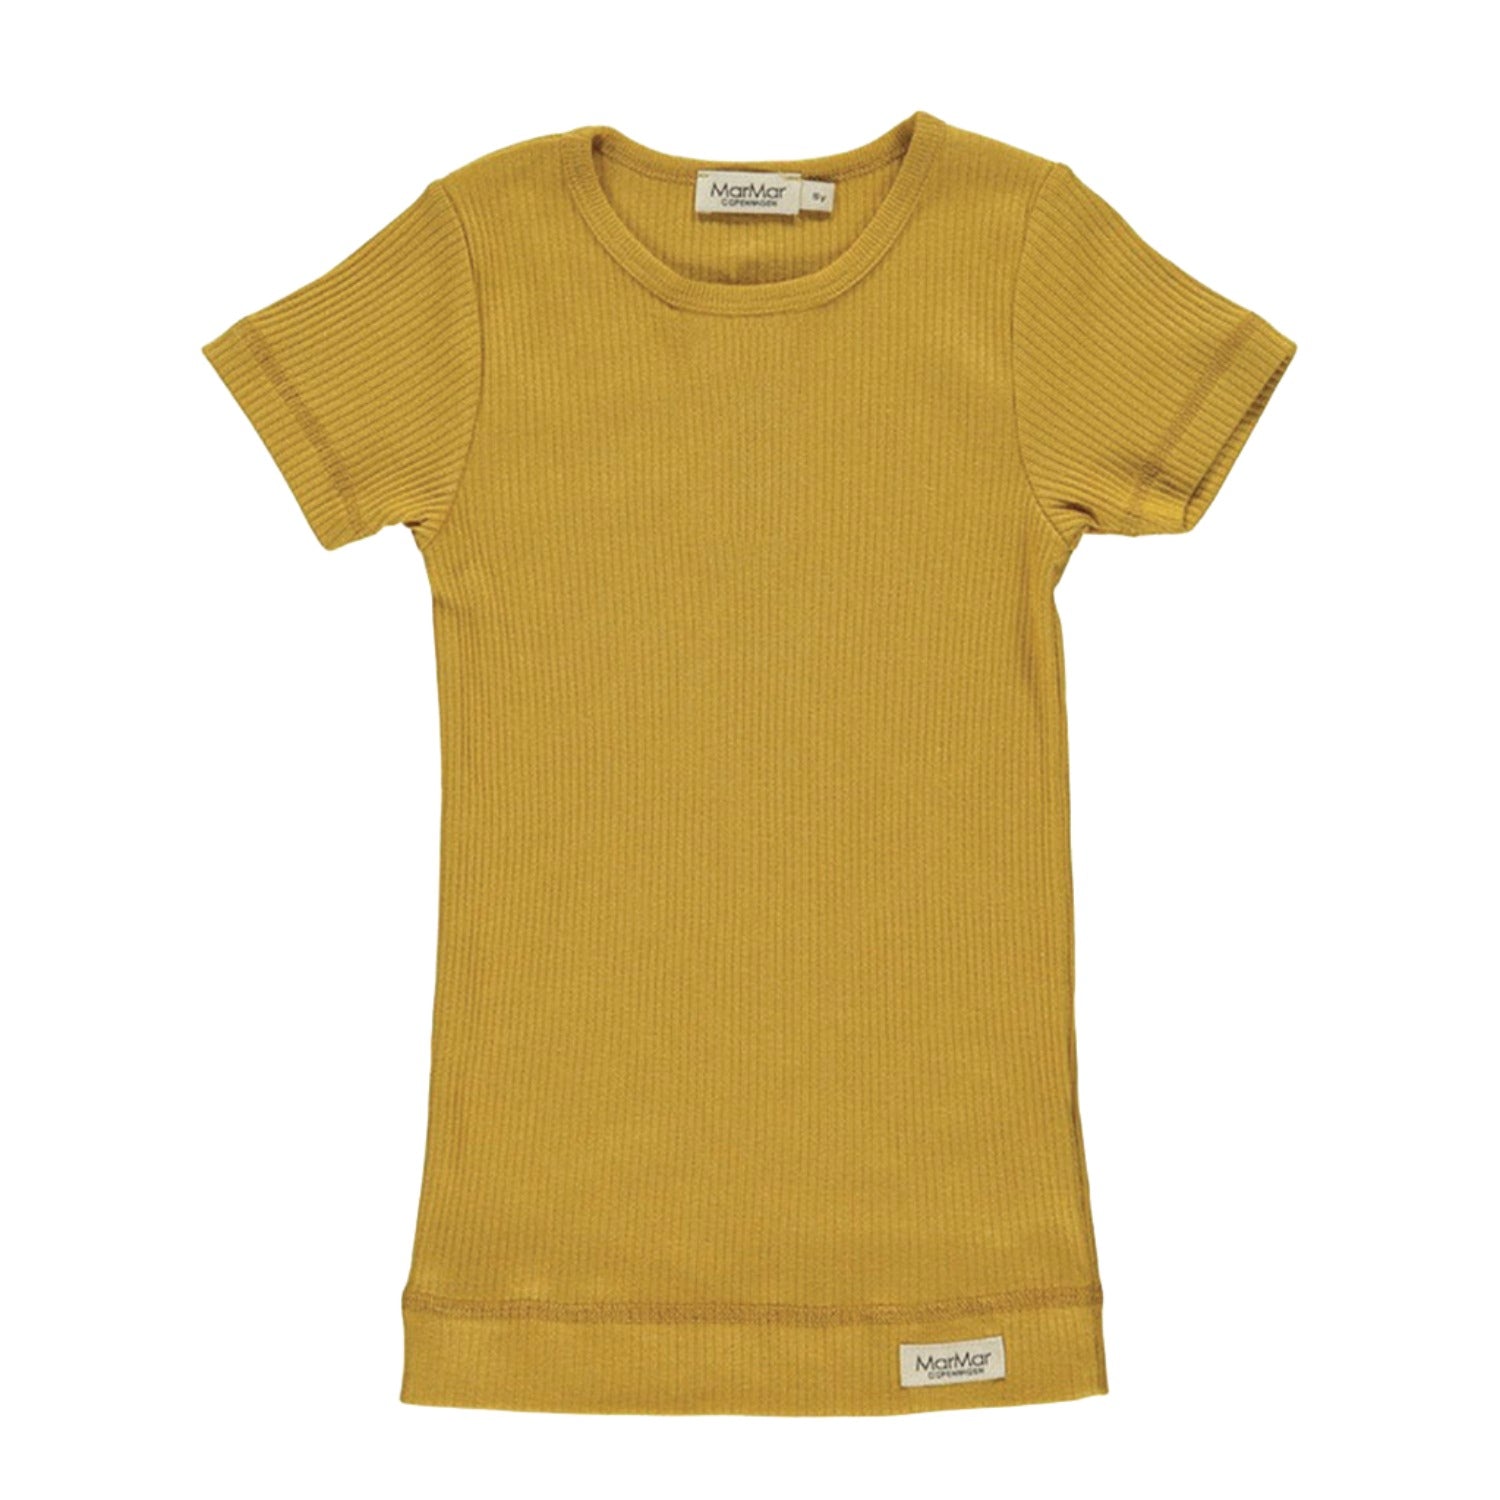 An image of Kids Short Sleeve T-shirt - Kids Top - Plain Tee Shirt| MarMar Copenhagen 1Y/80C...